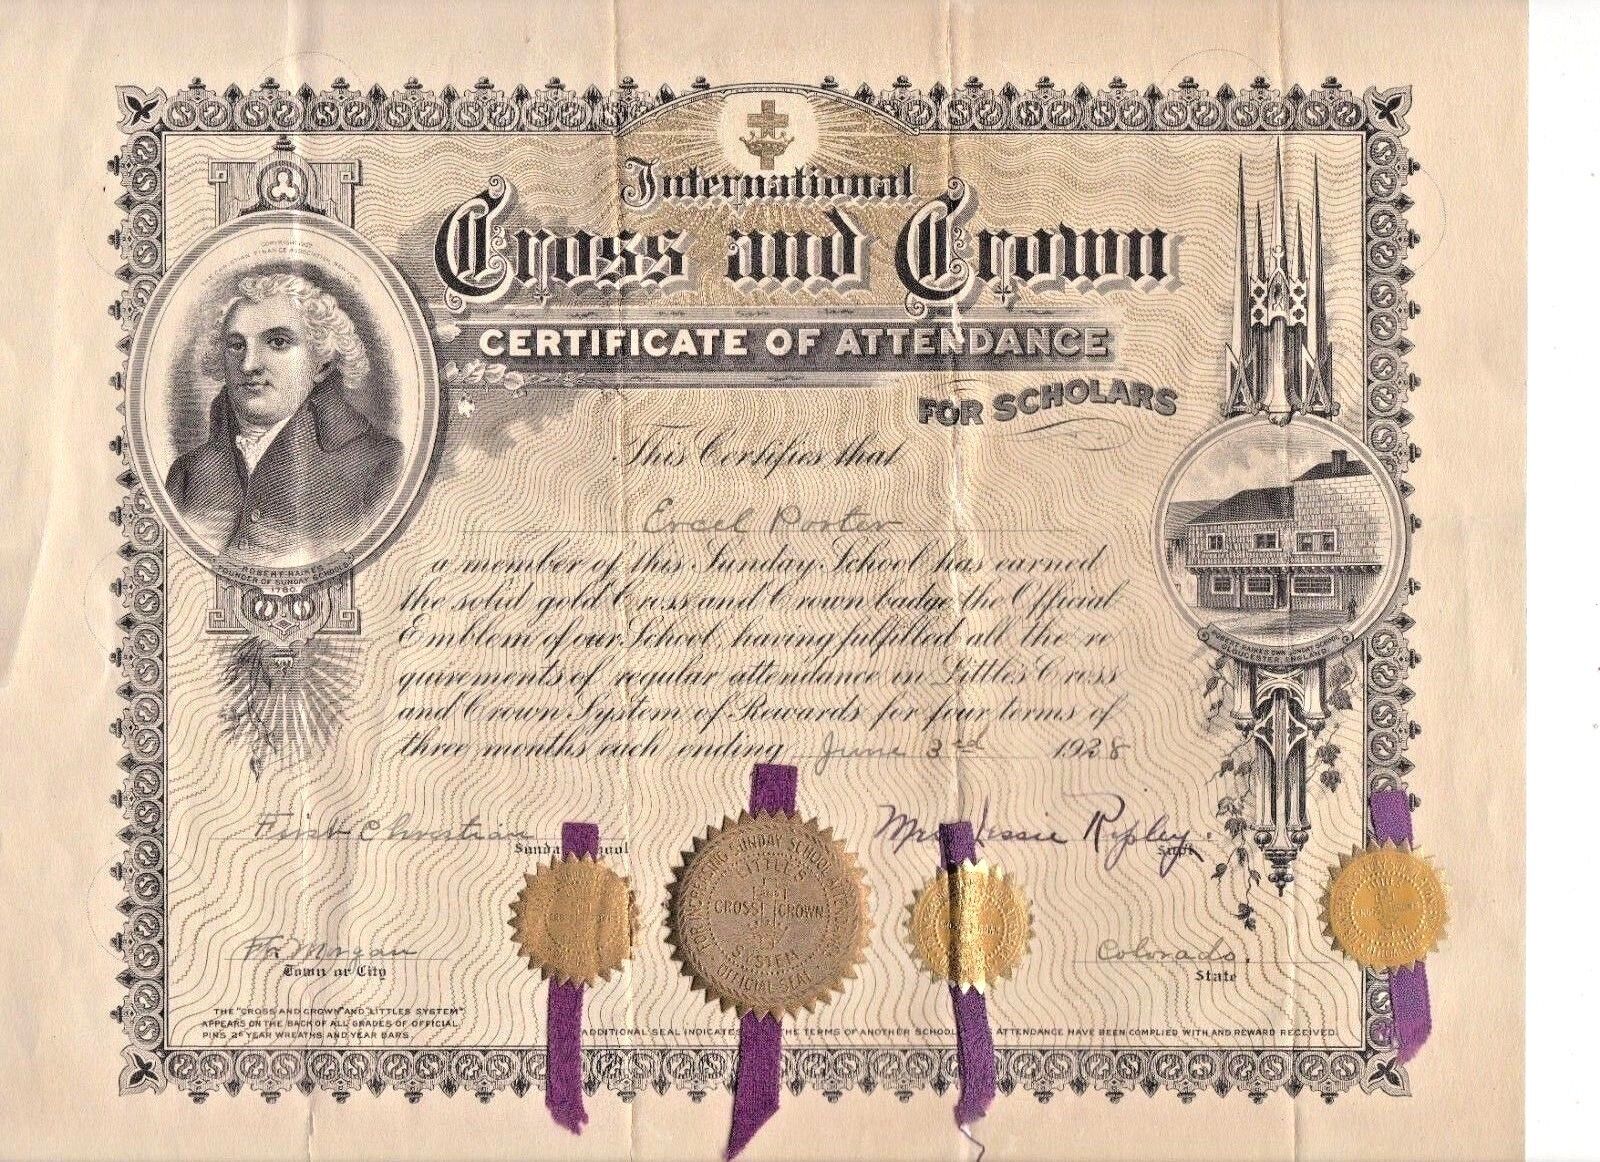 1928 Ft Morgan Colorado-First Christian Sunday School Certificate-Ercel Porter